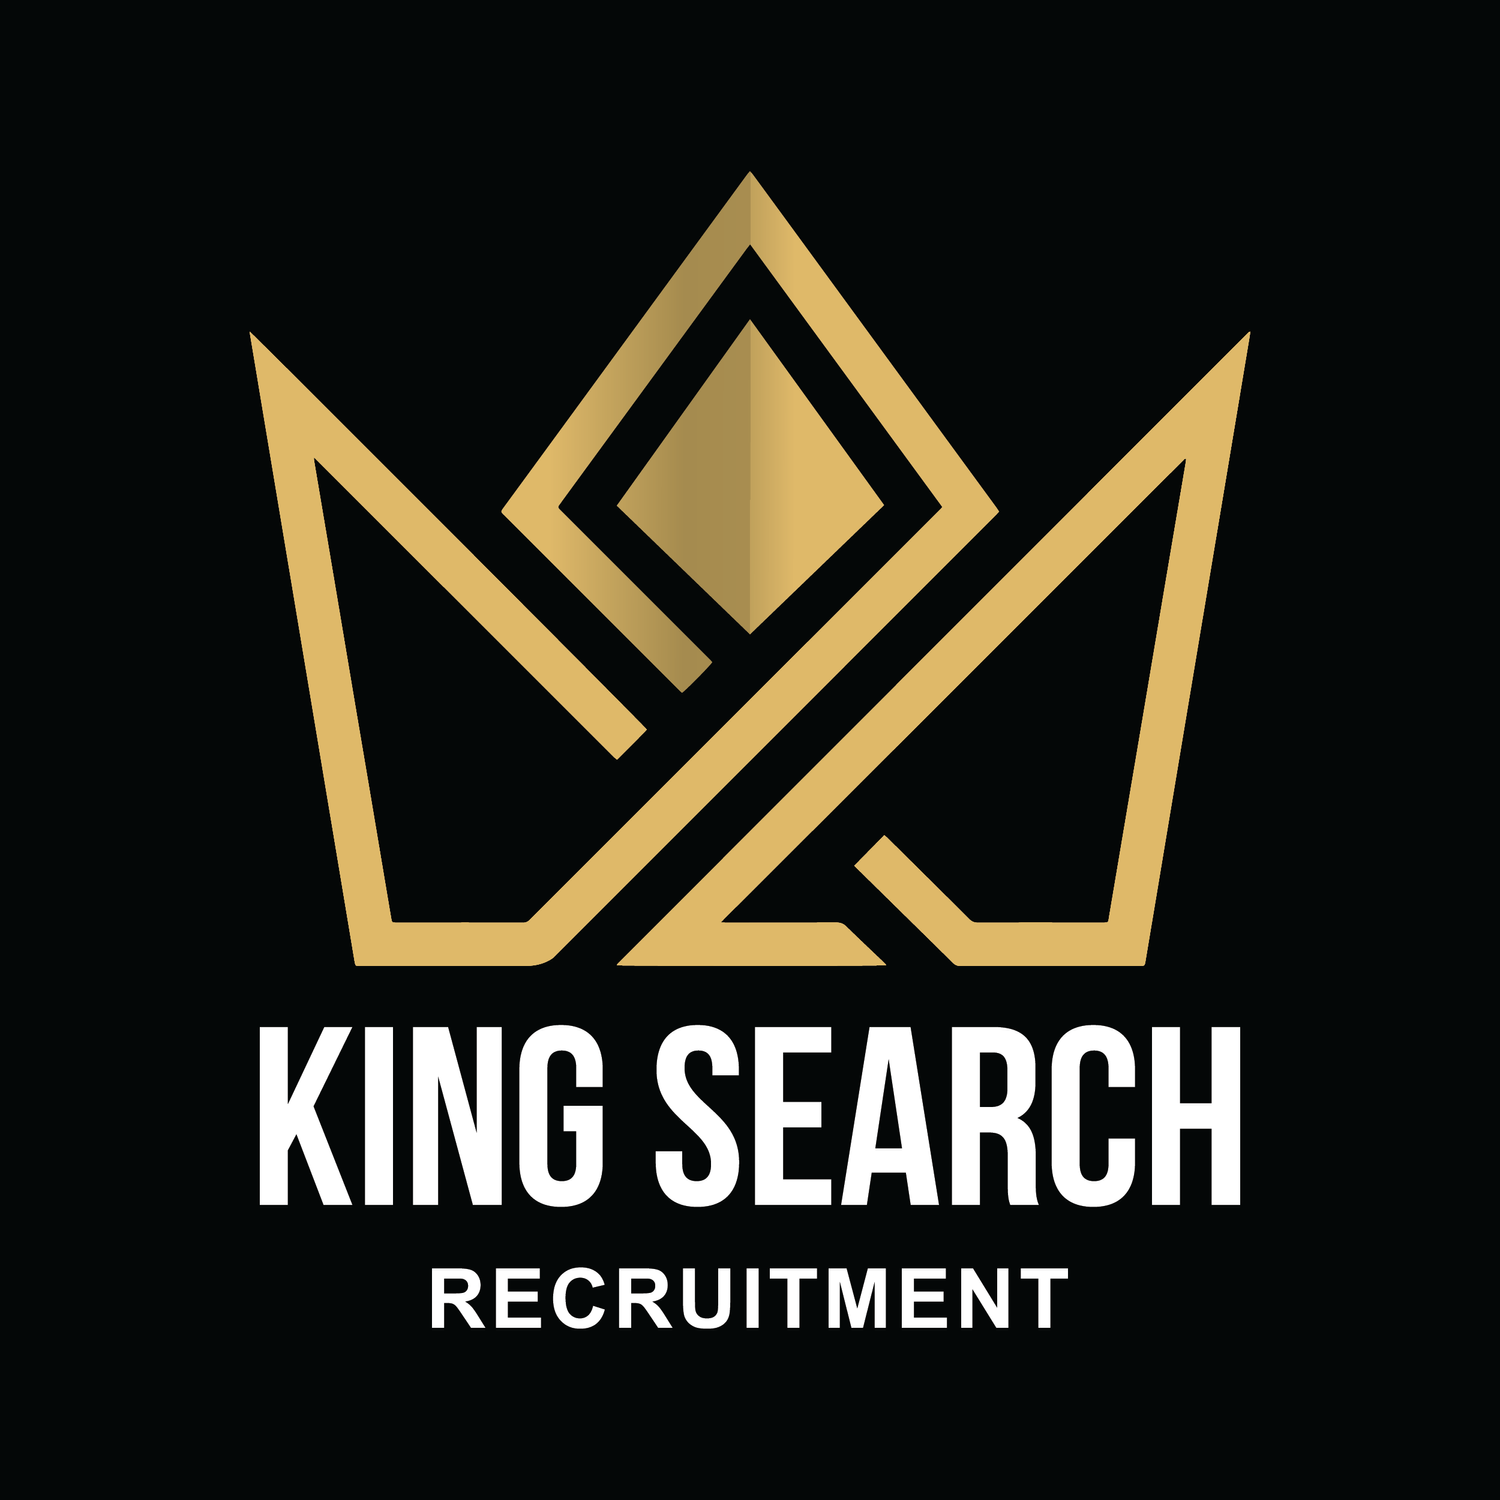 King Search Recruitment